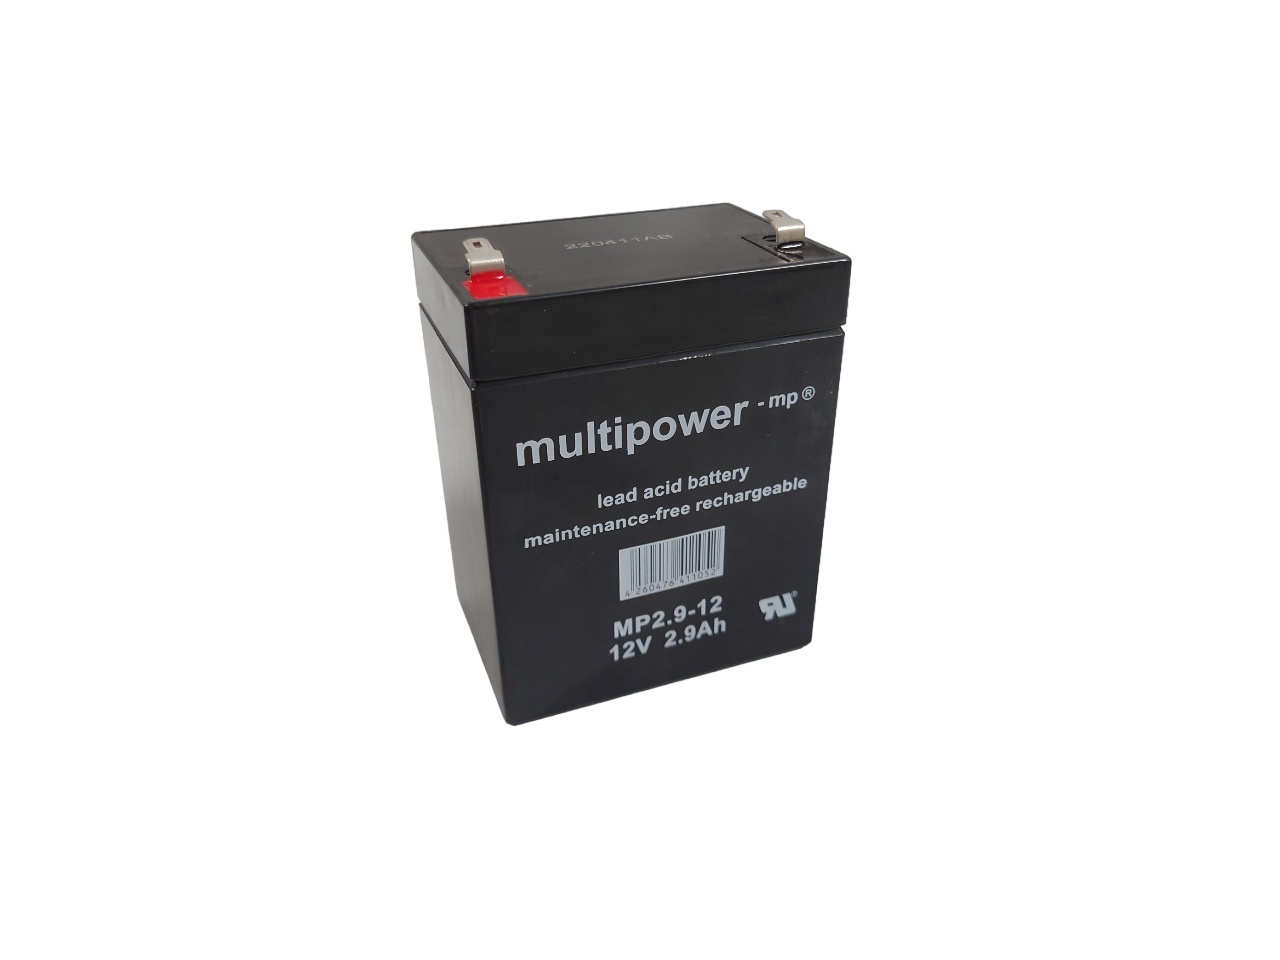 Multipower MP 2,9-12 VdS